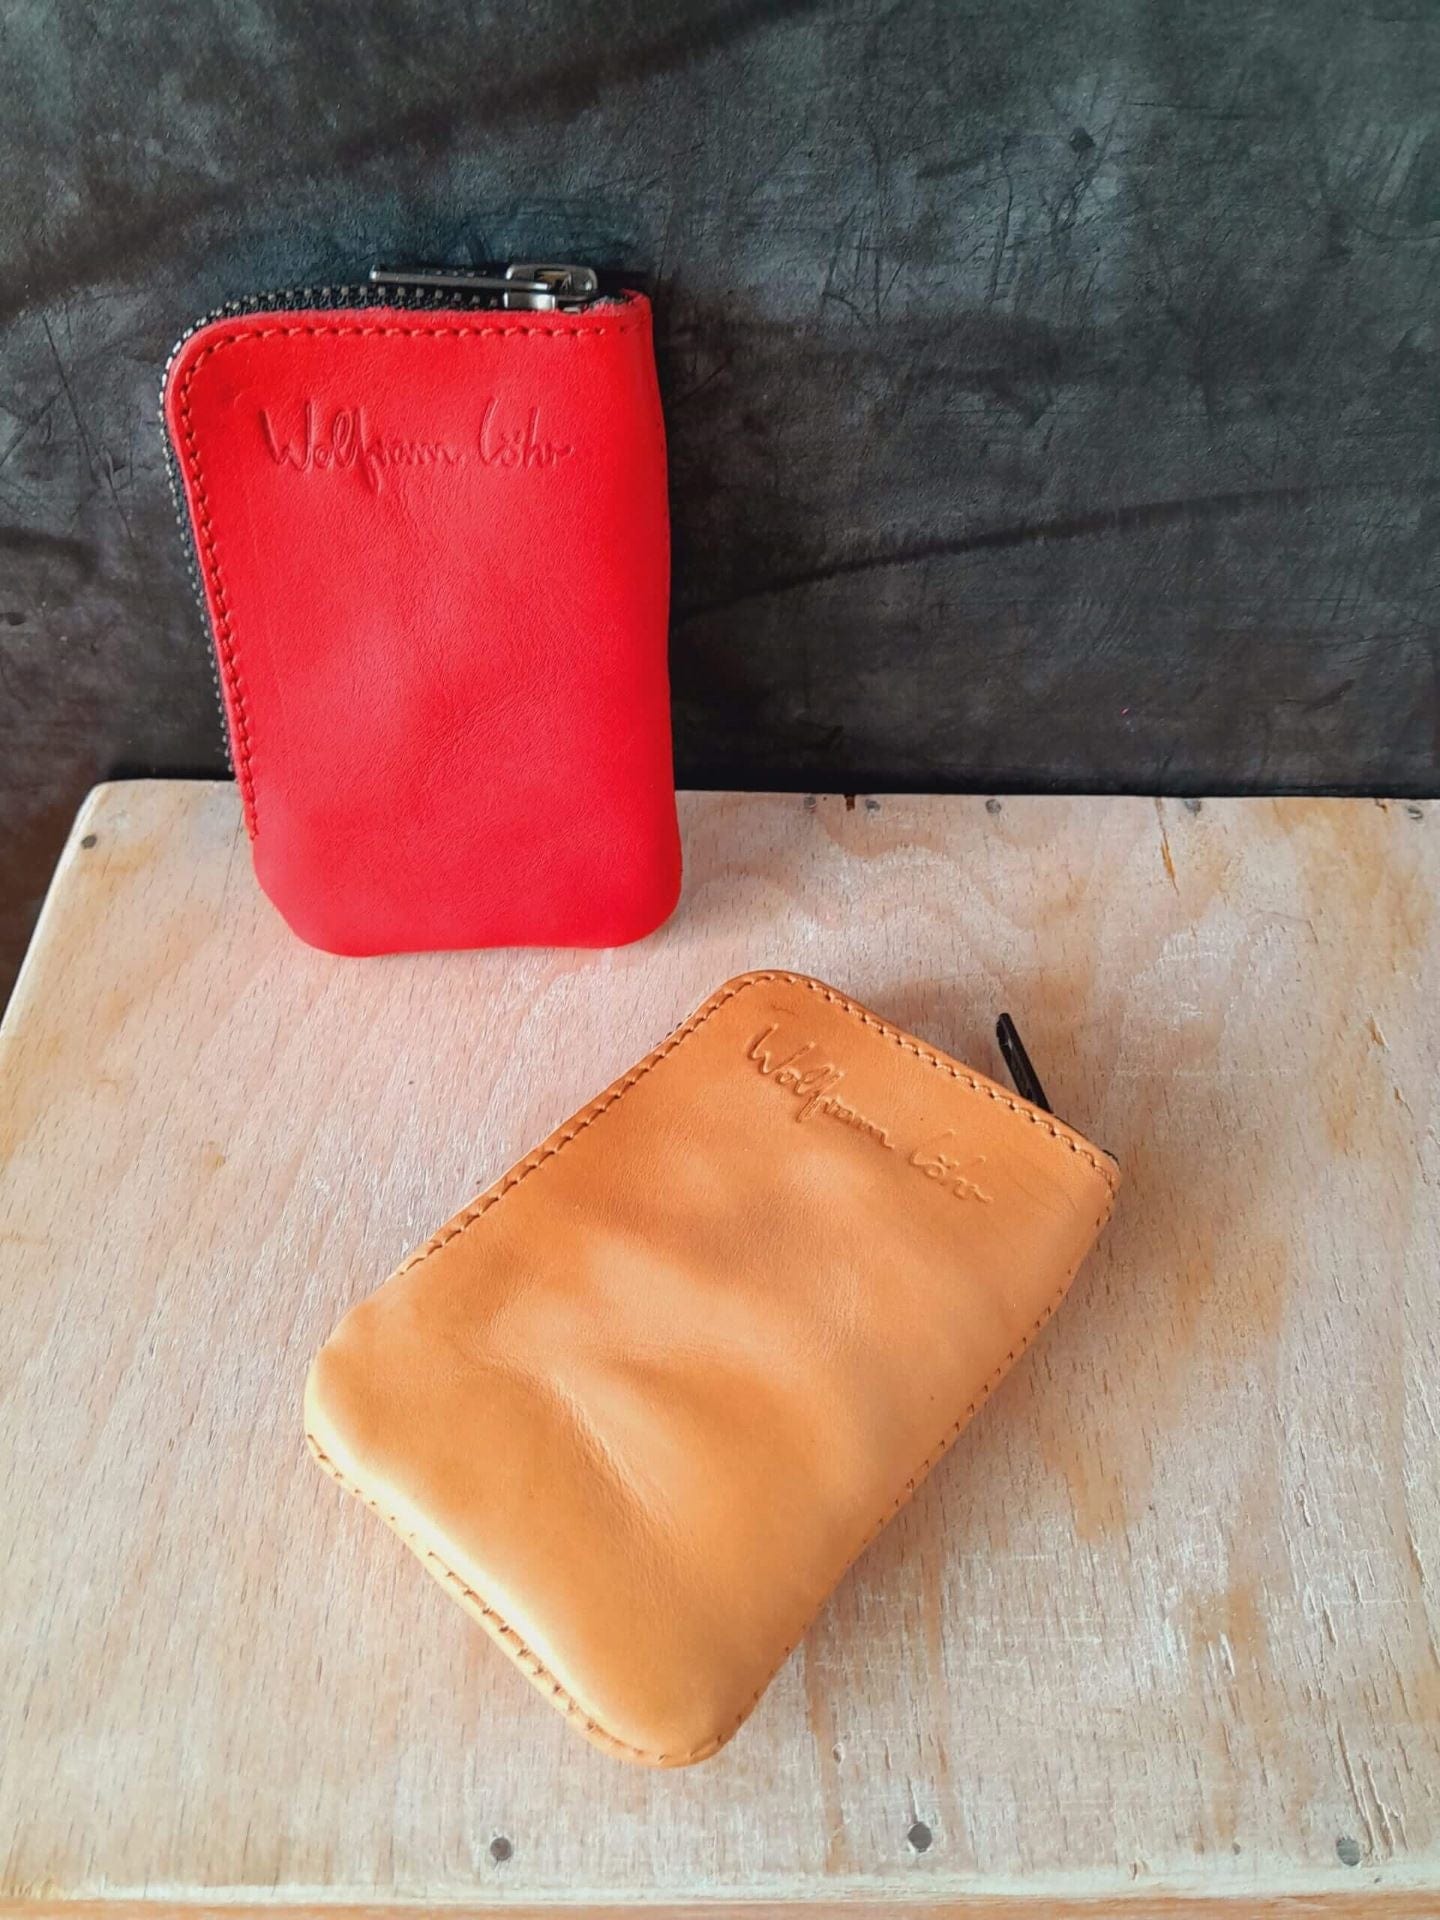 Wolfram Lohr Leather Zip Card Purse